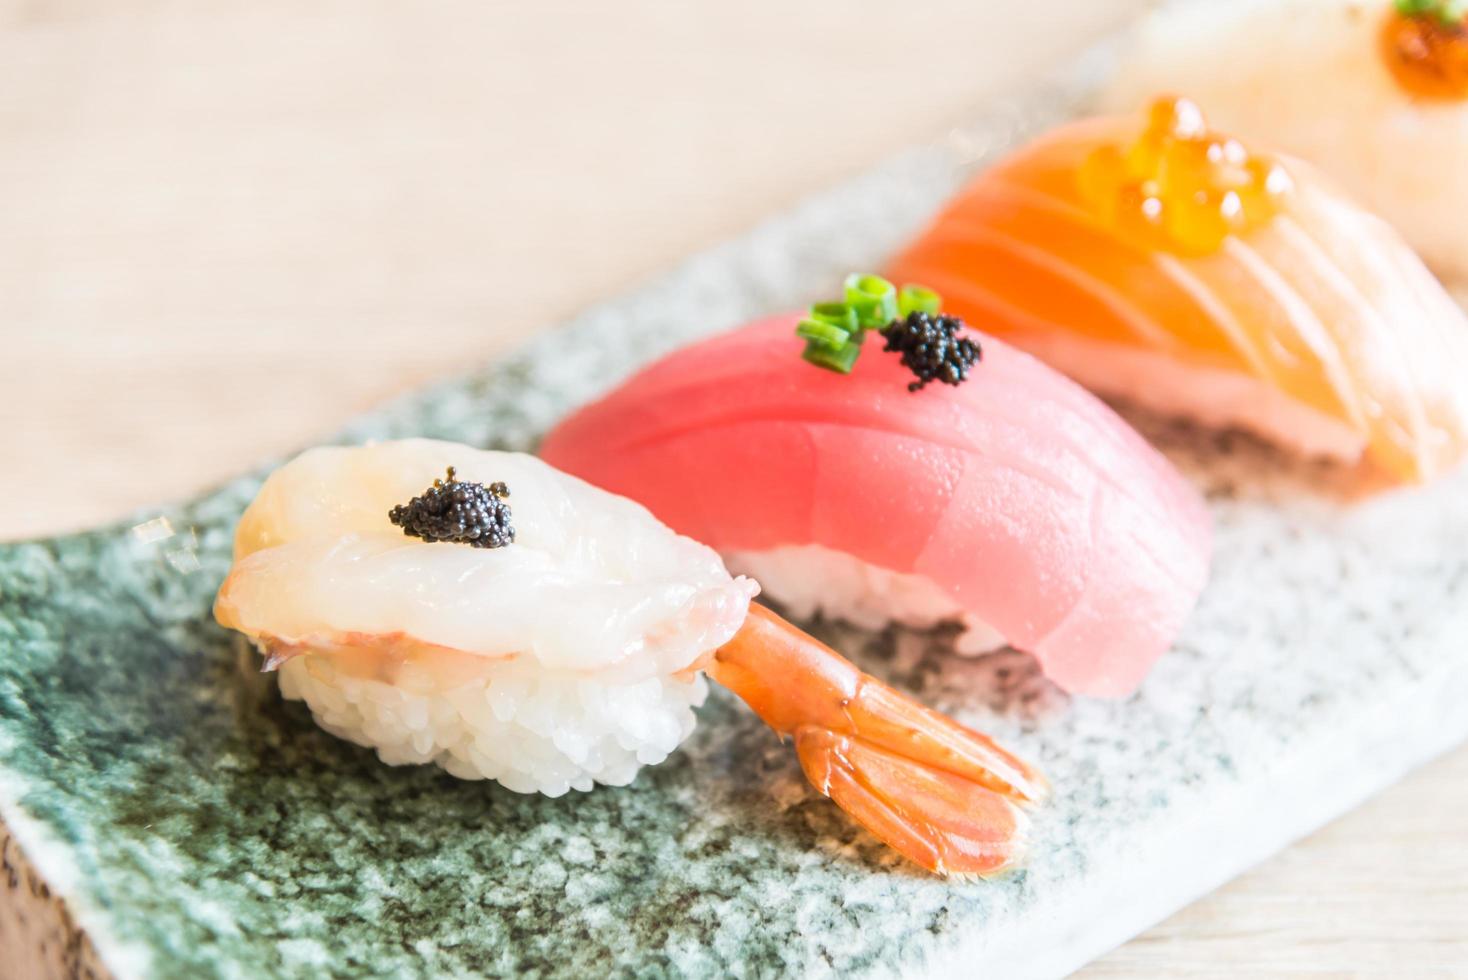 ponto de foco seletivo no rolo de sushi foto